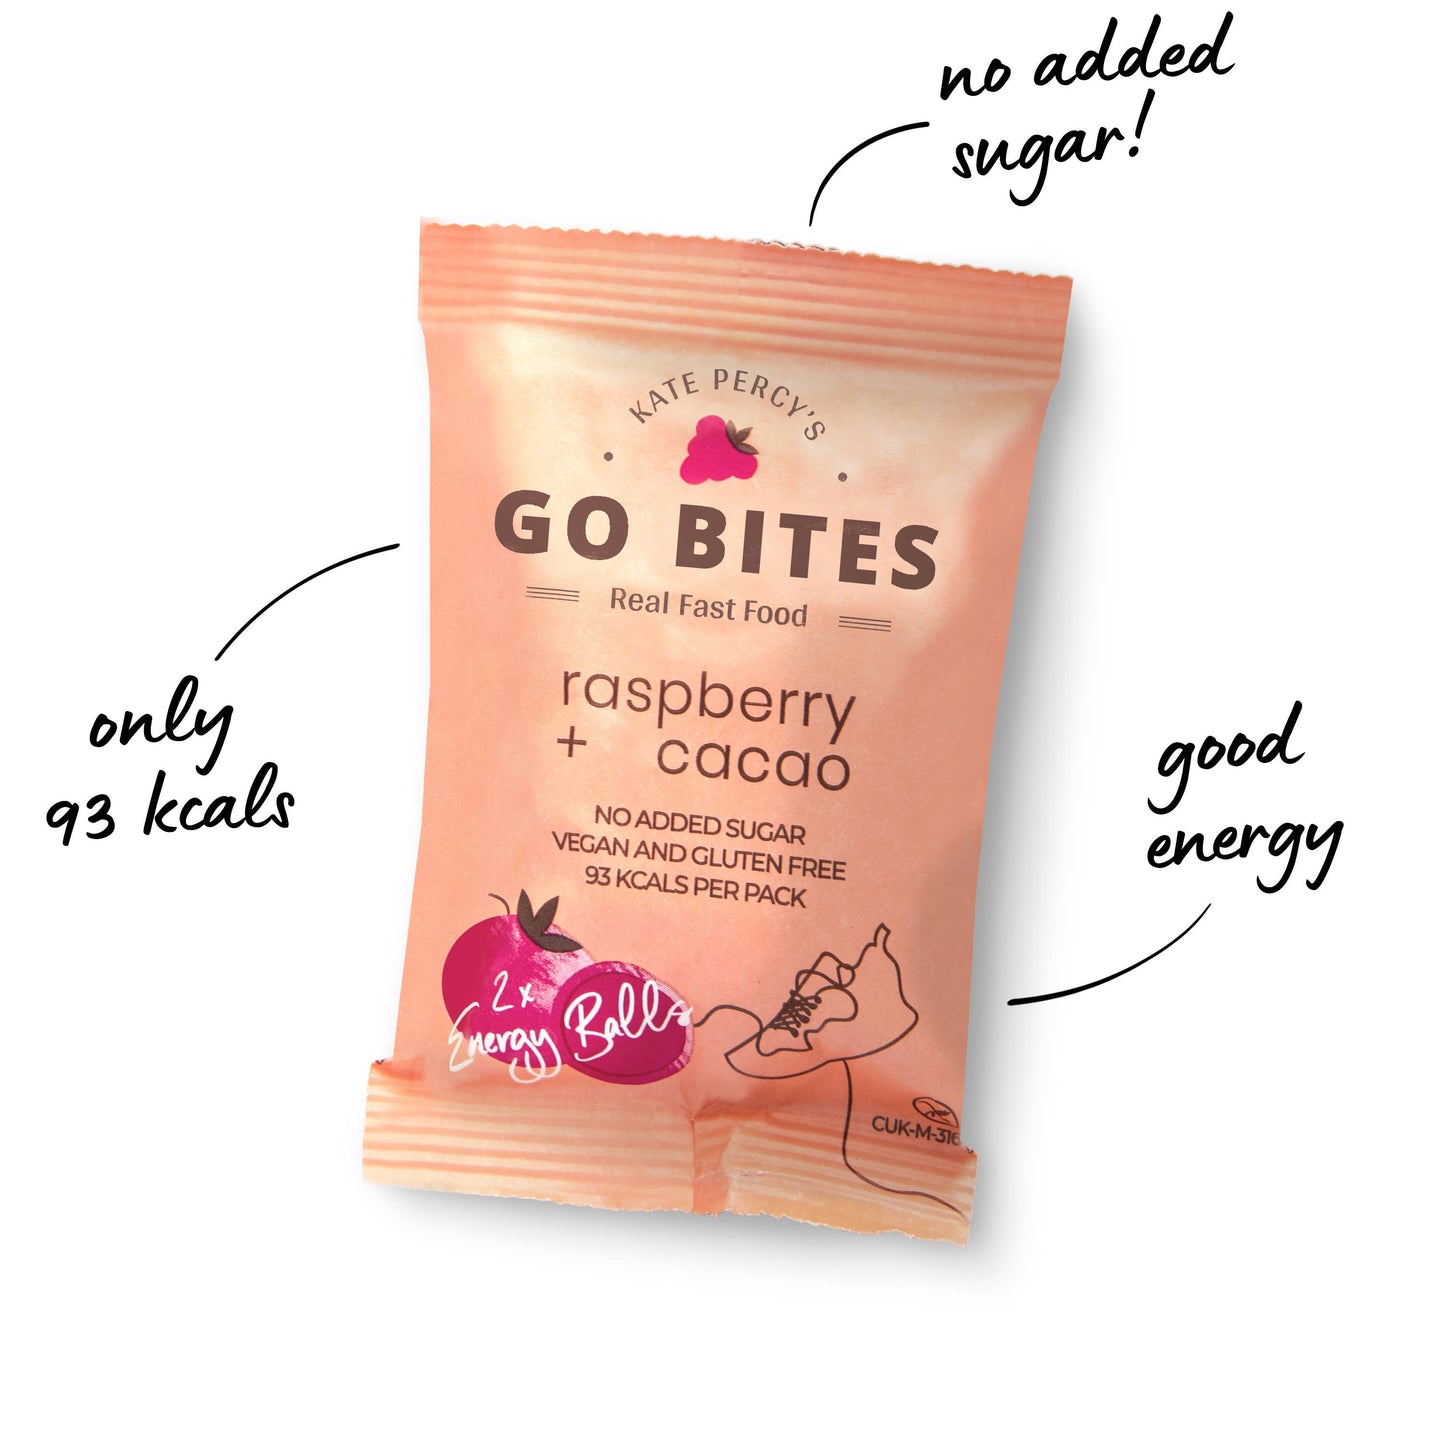 Kate Percy's Go Bites Raspberry & Cacao